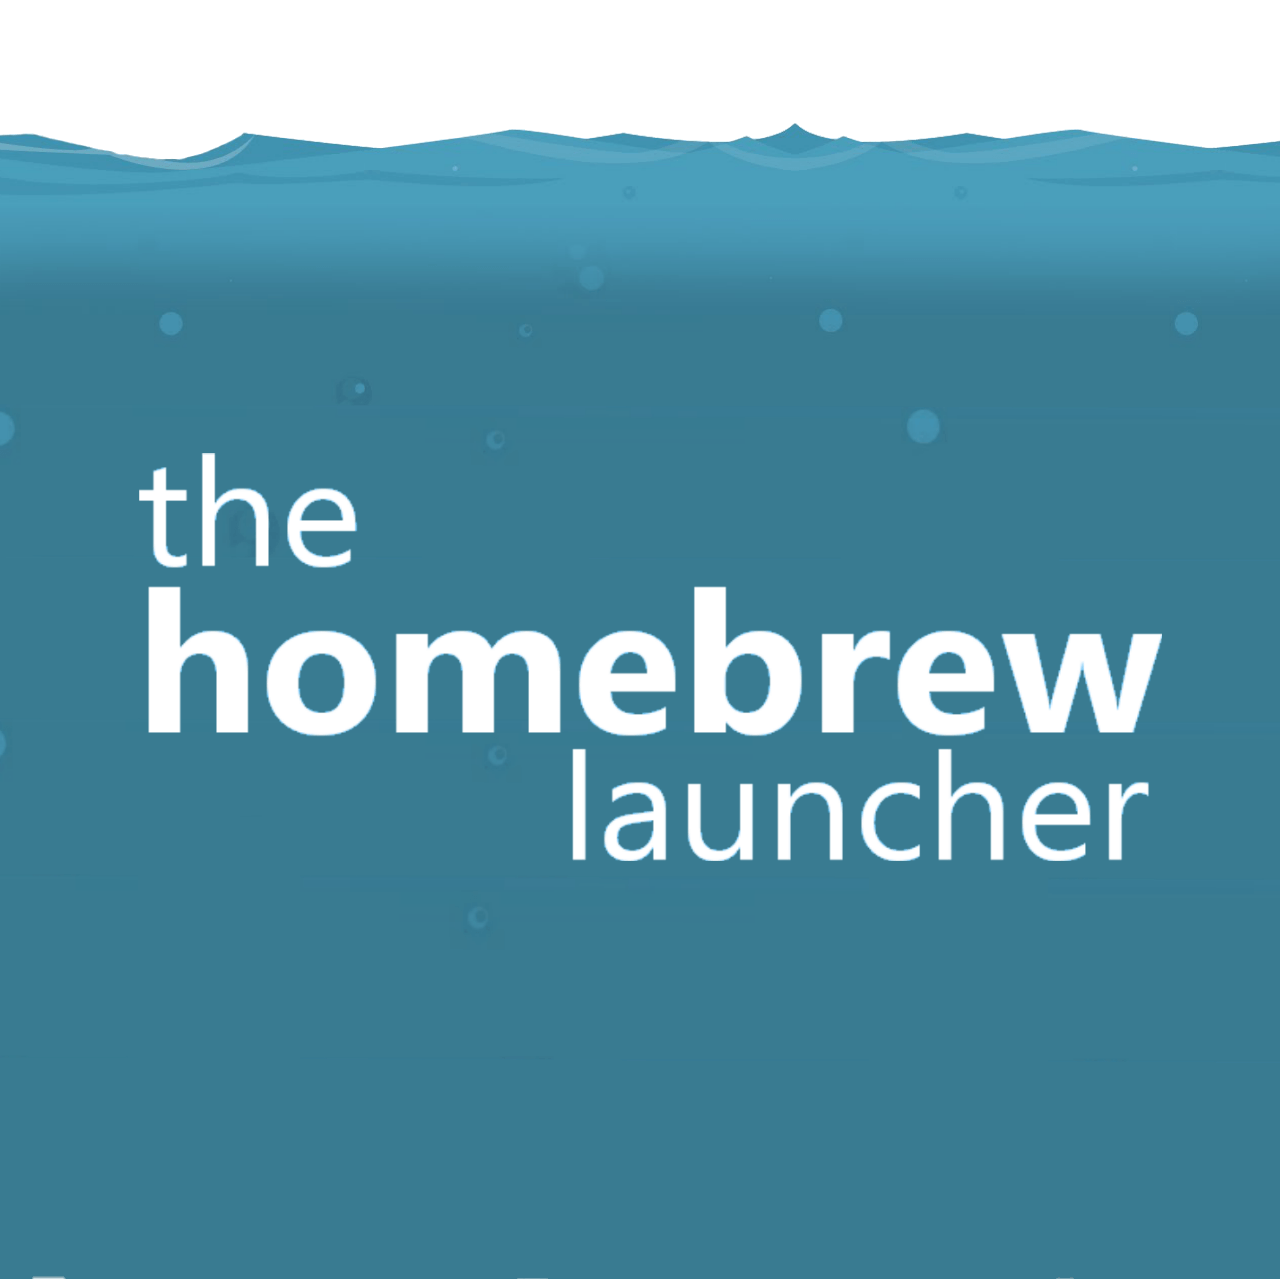 Homebrew Logo - Logo for Homebrew Launcher shortcut (for Home Menu) - Album on Imgur